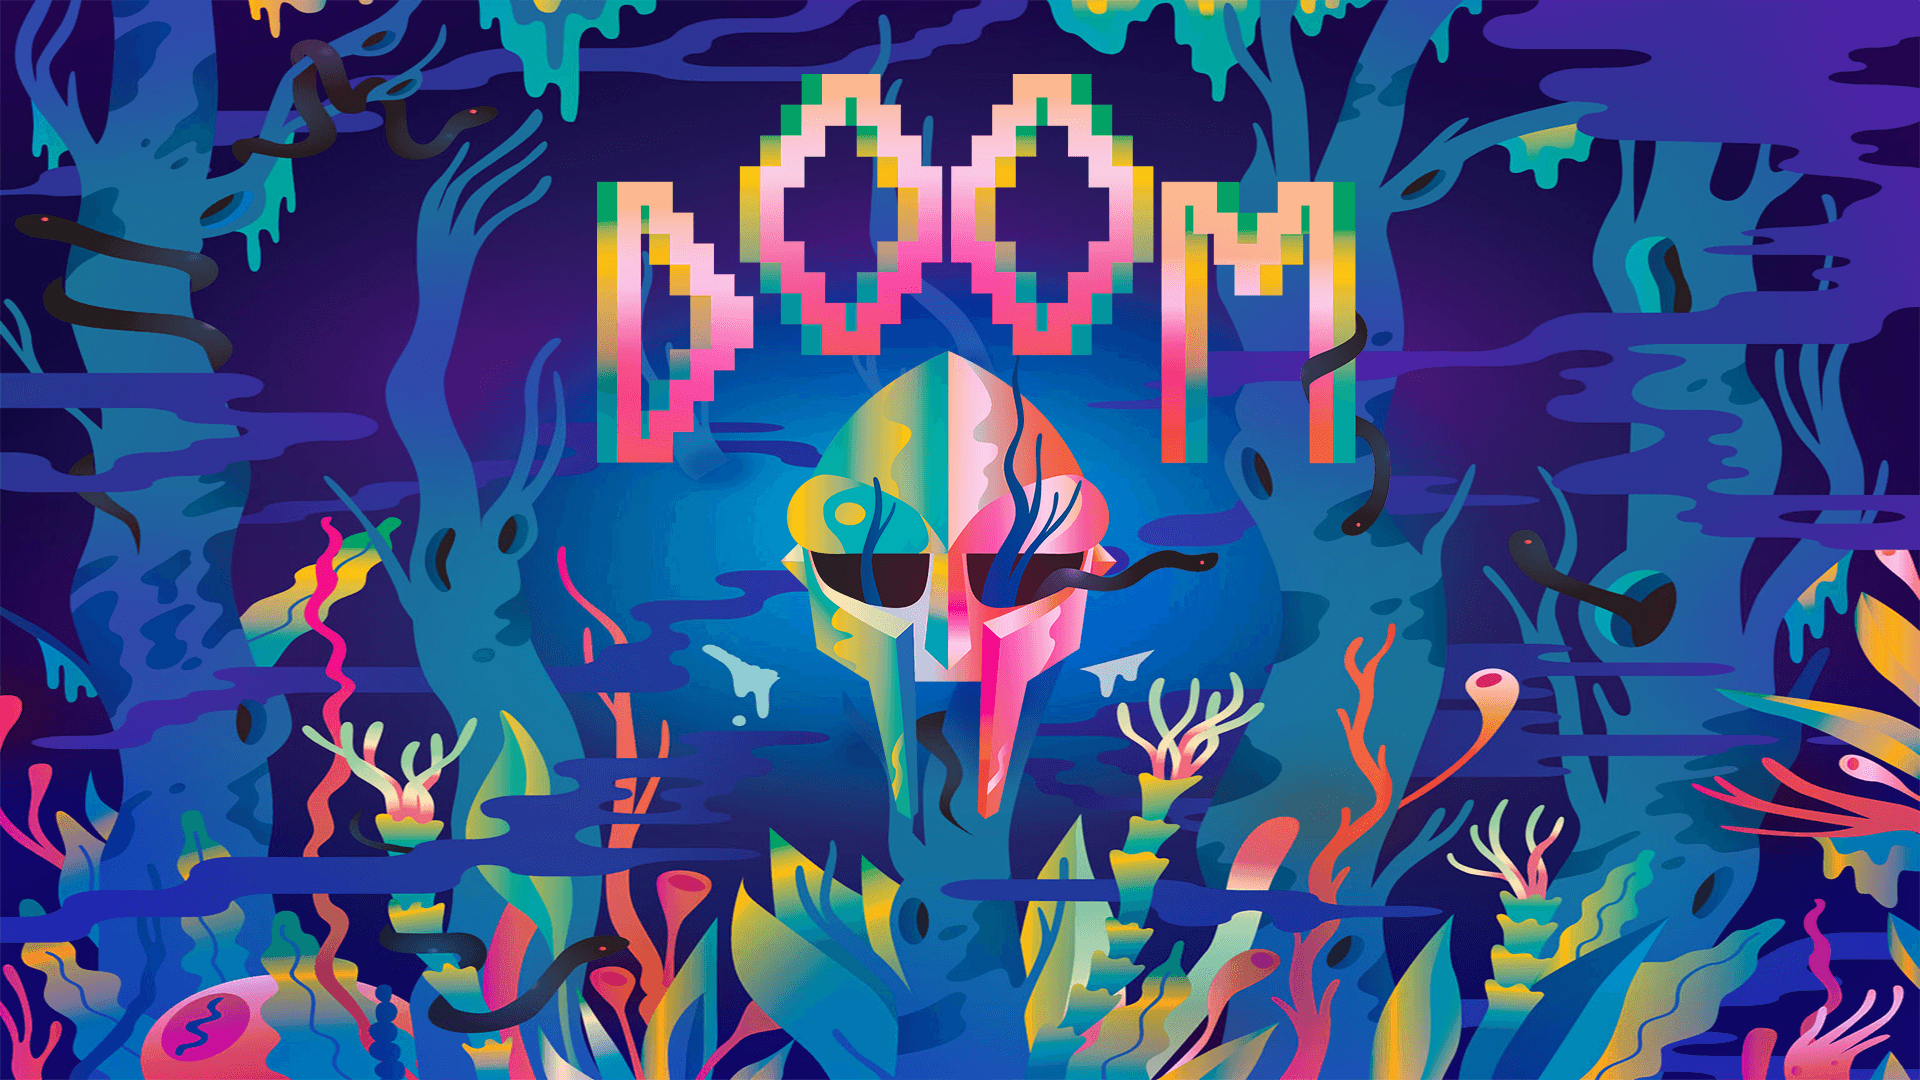 MF Doom Desktop Wallpaper